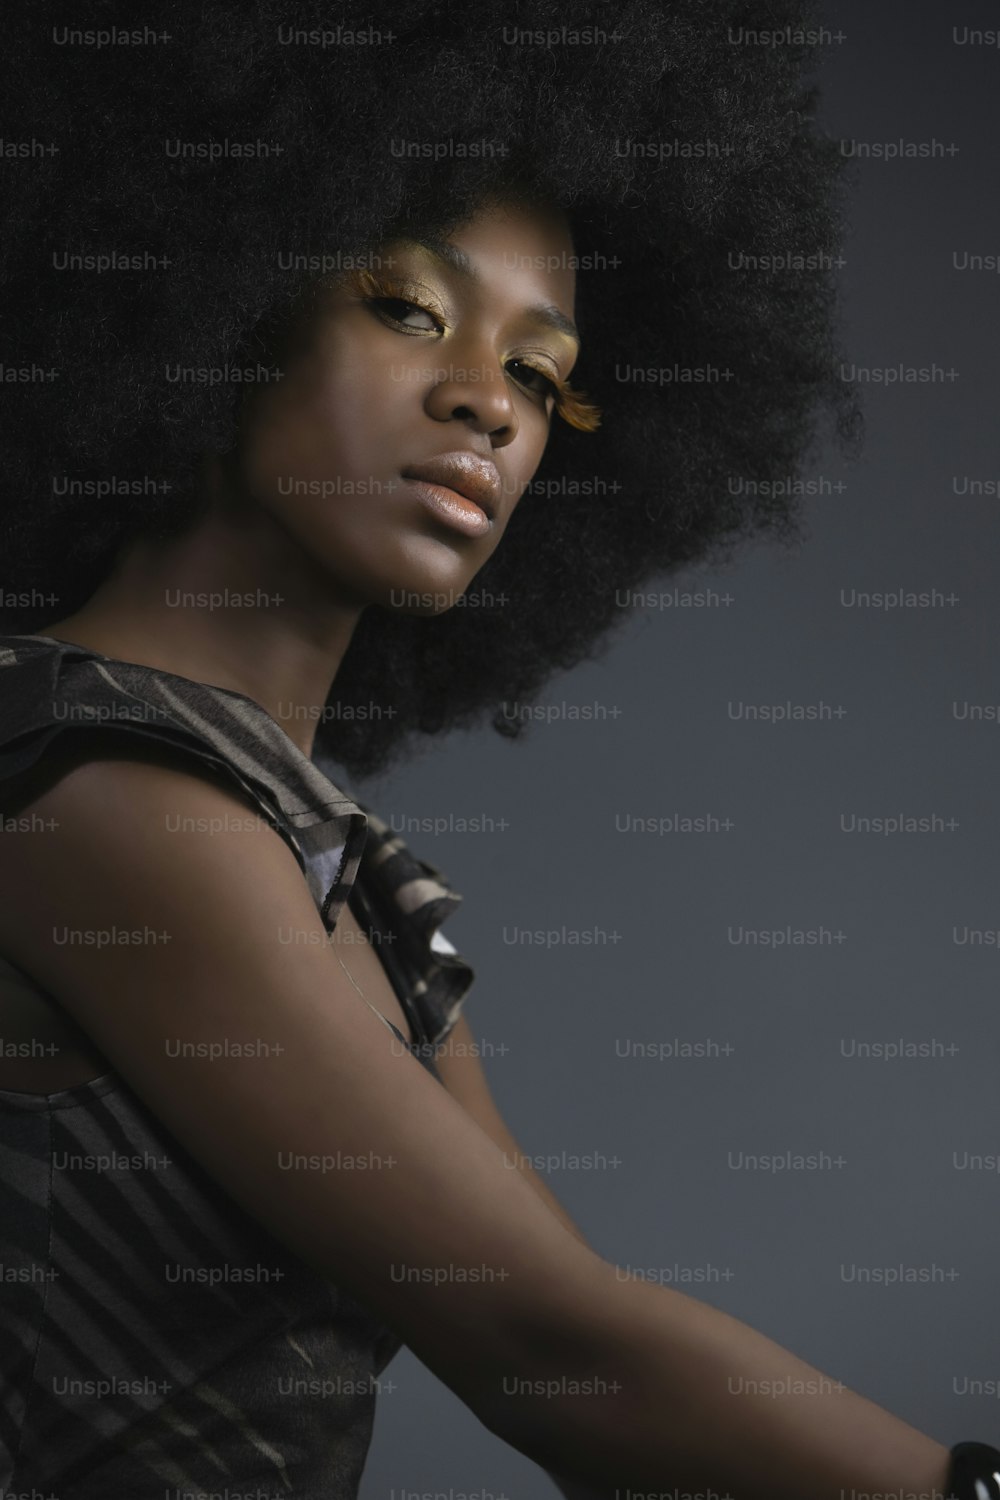 Una mujer con un afro sosteniendo un teléfono celular